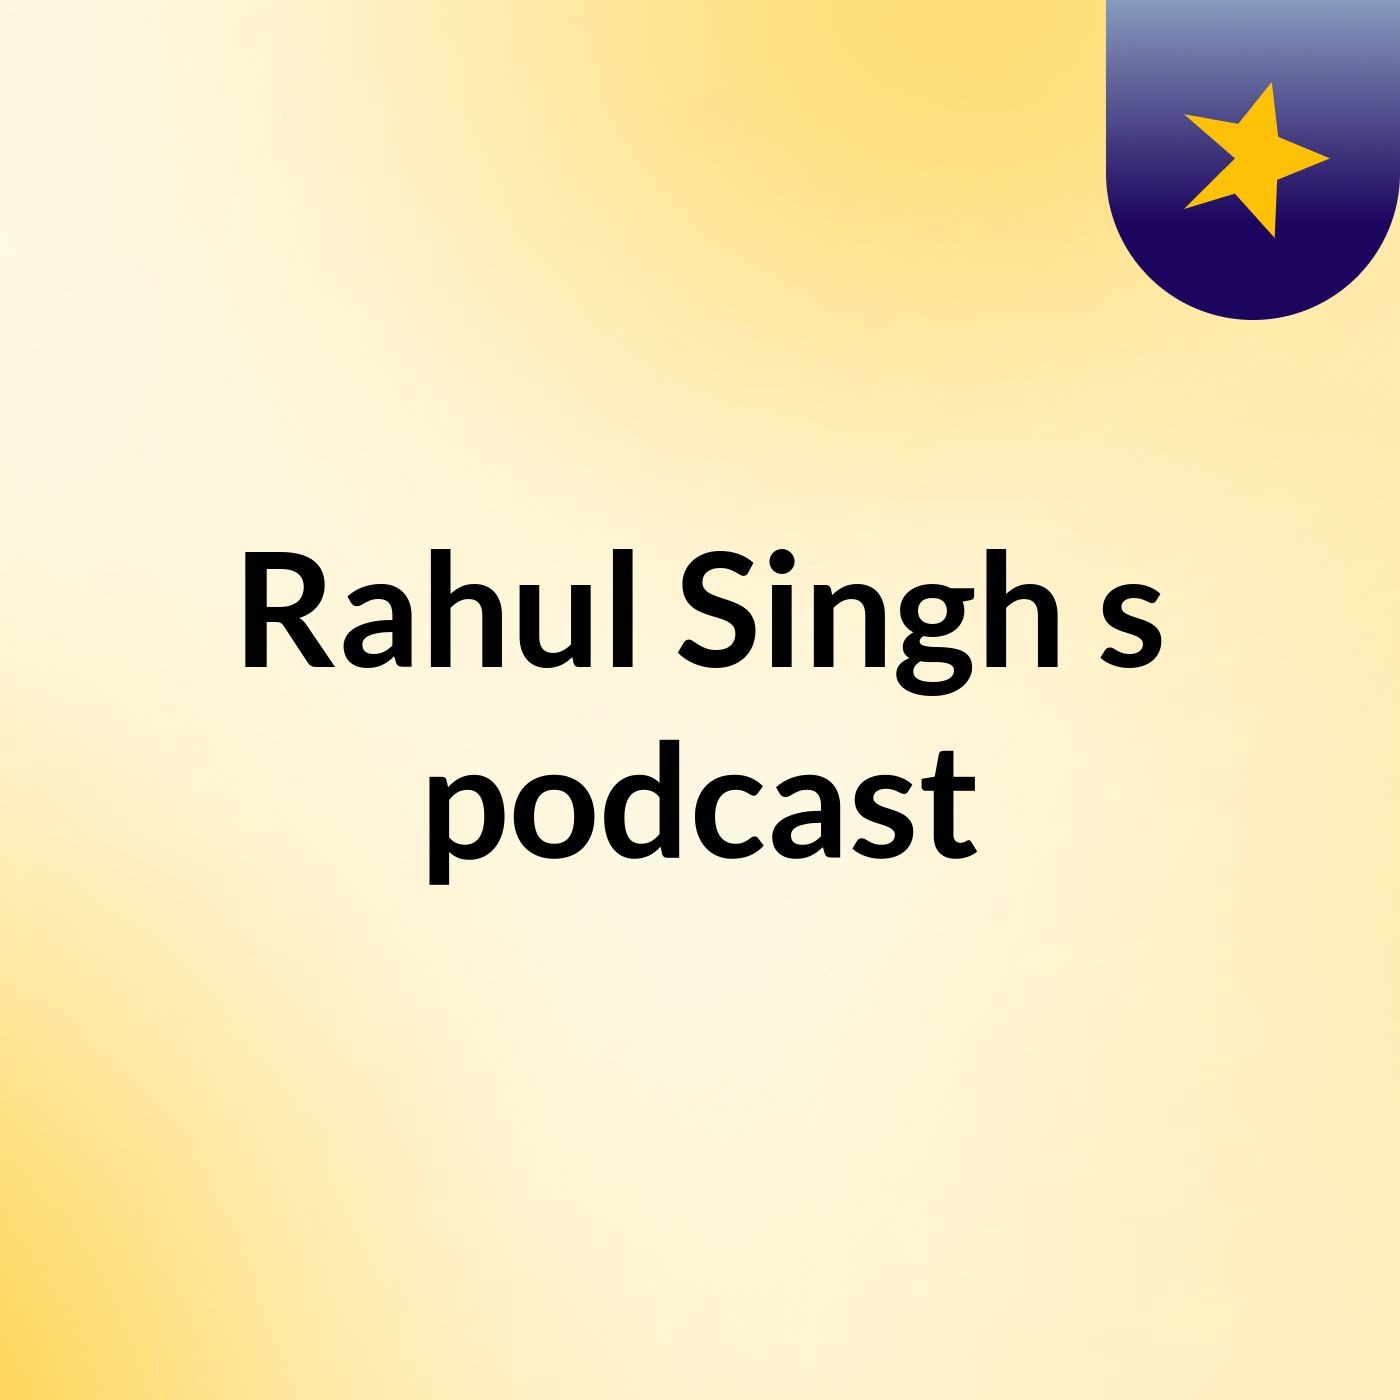 Rahul Singh's podcast